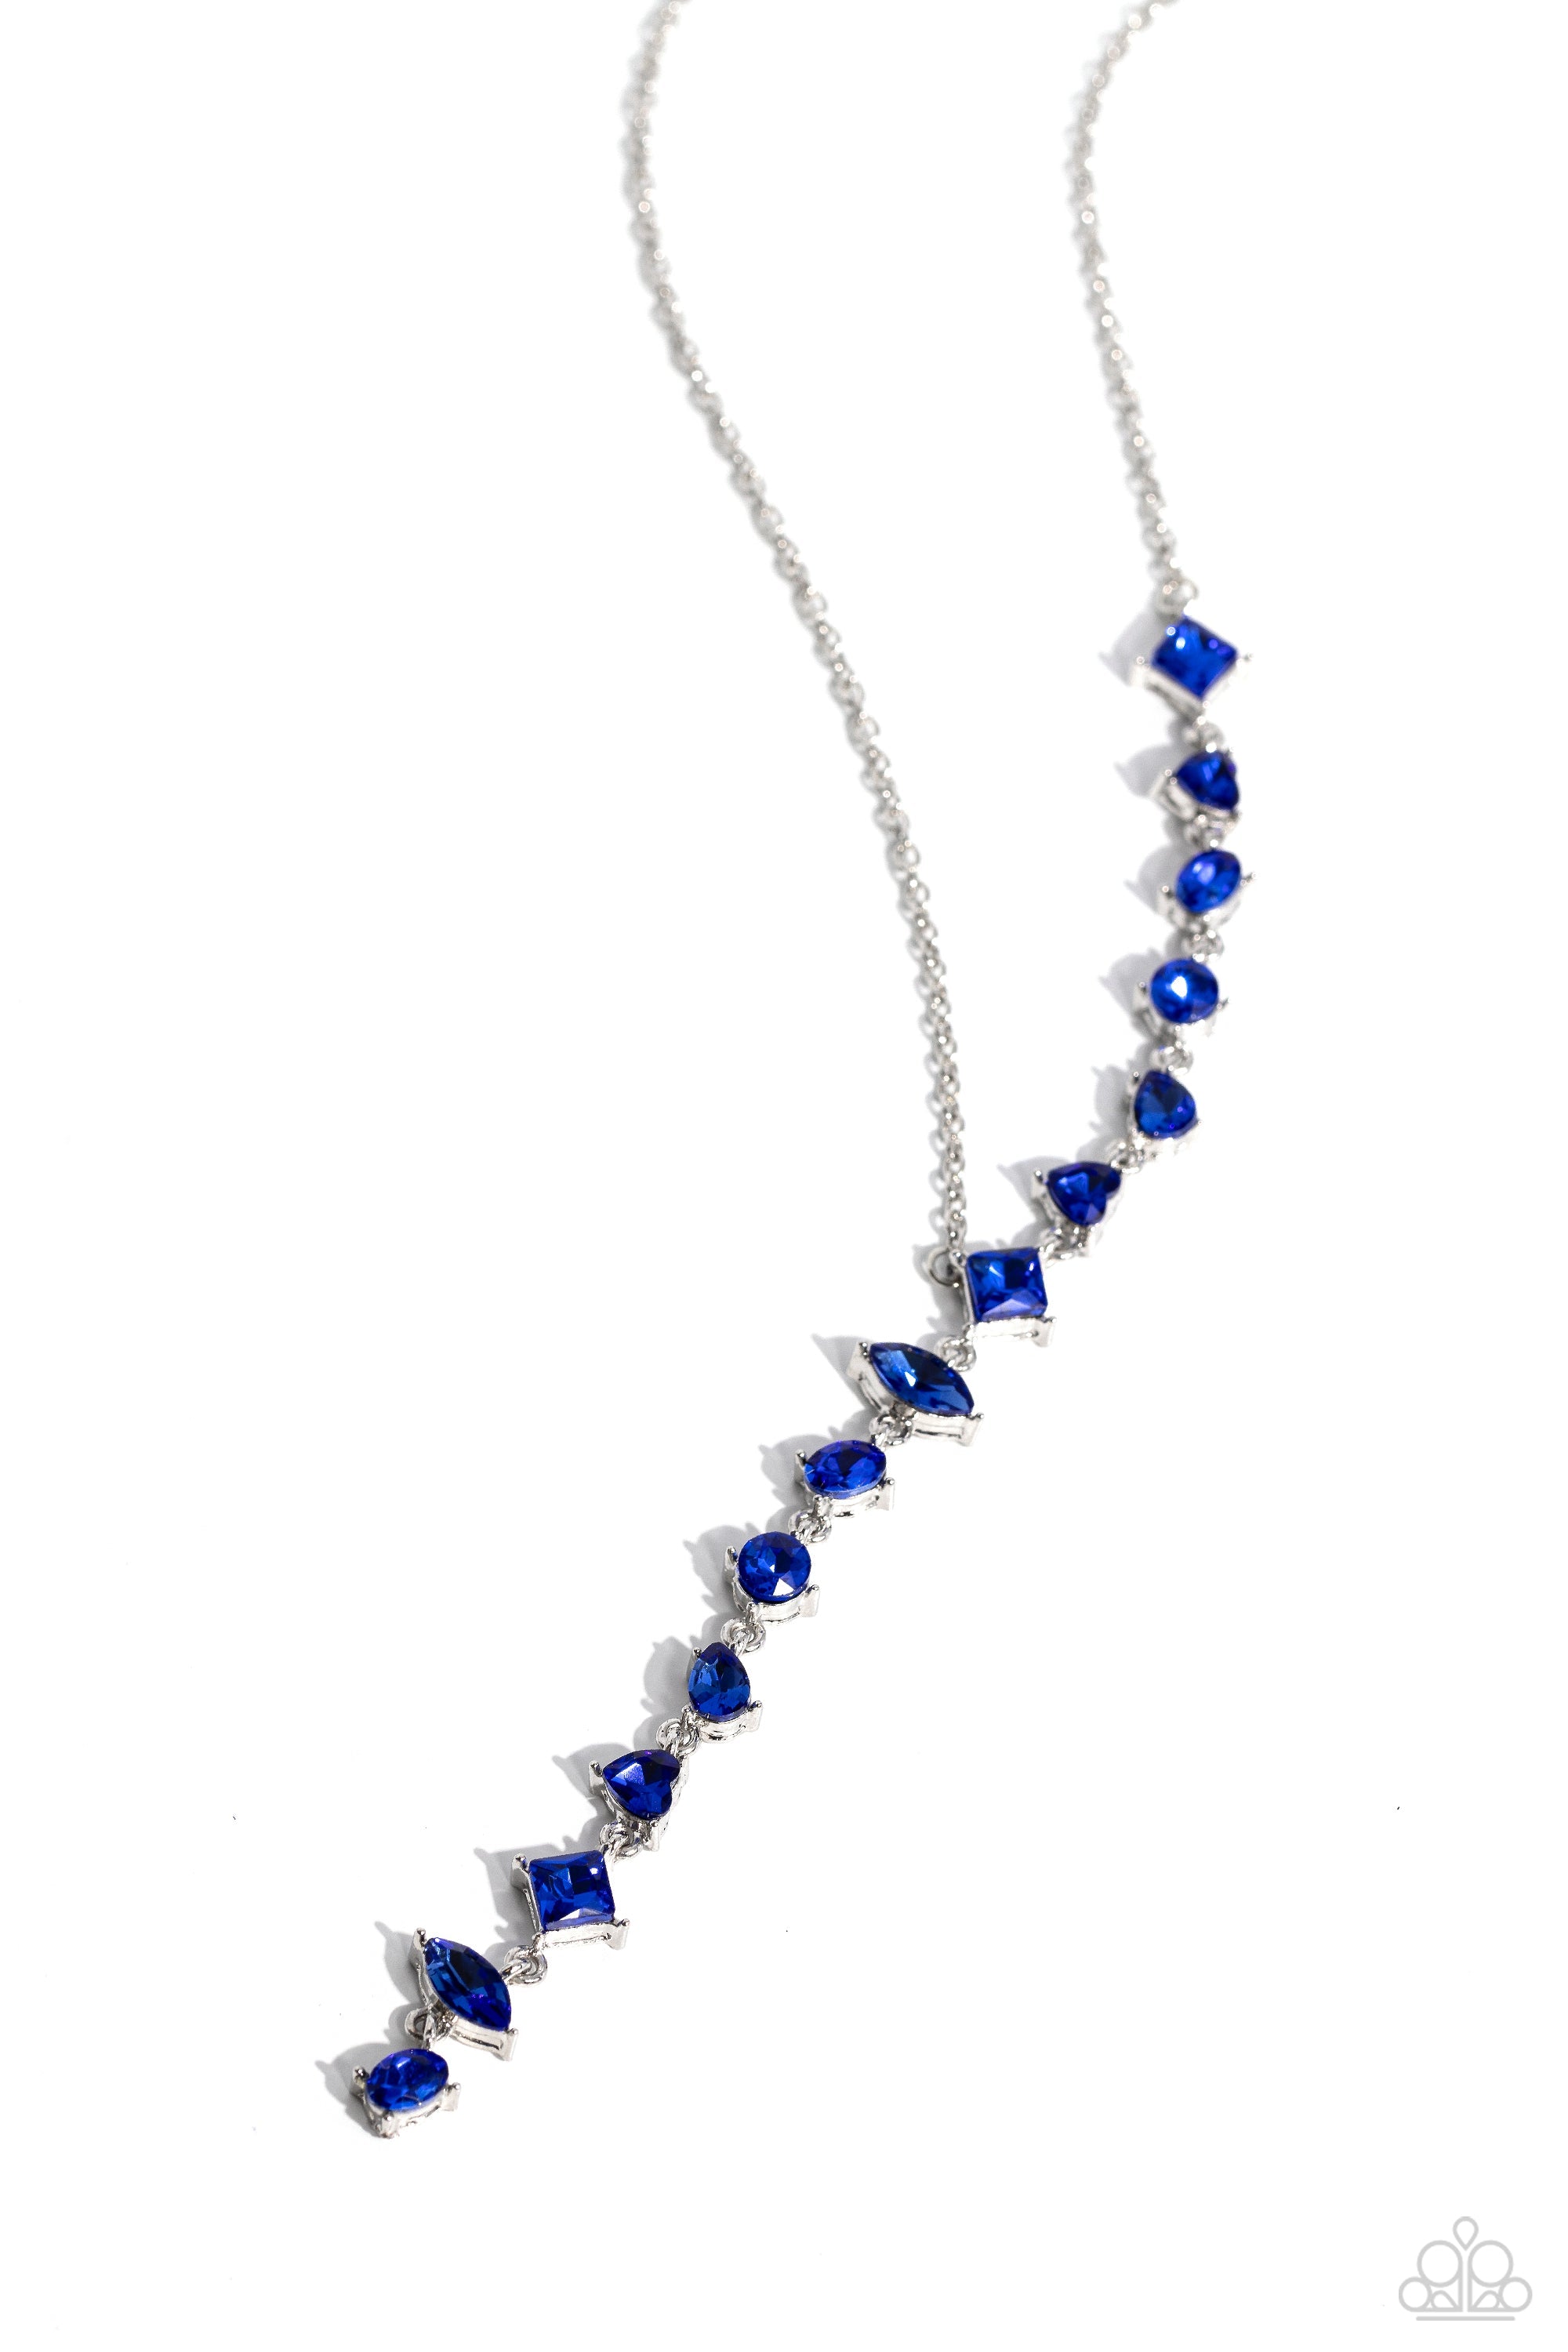 Diagonal Daydream Blue Rhinestone Necklace - Paparazzi Accessories- lightbox - CarasShop.com - $5 Jewelry by Cara Jewels